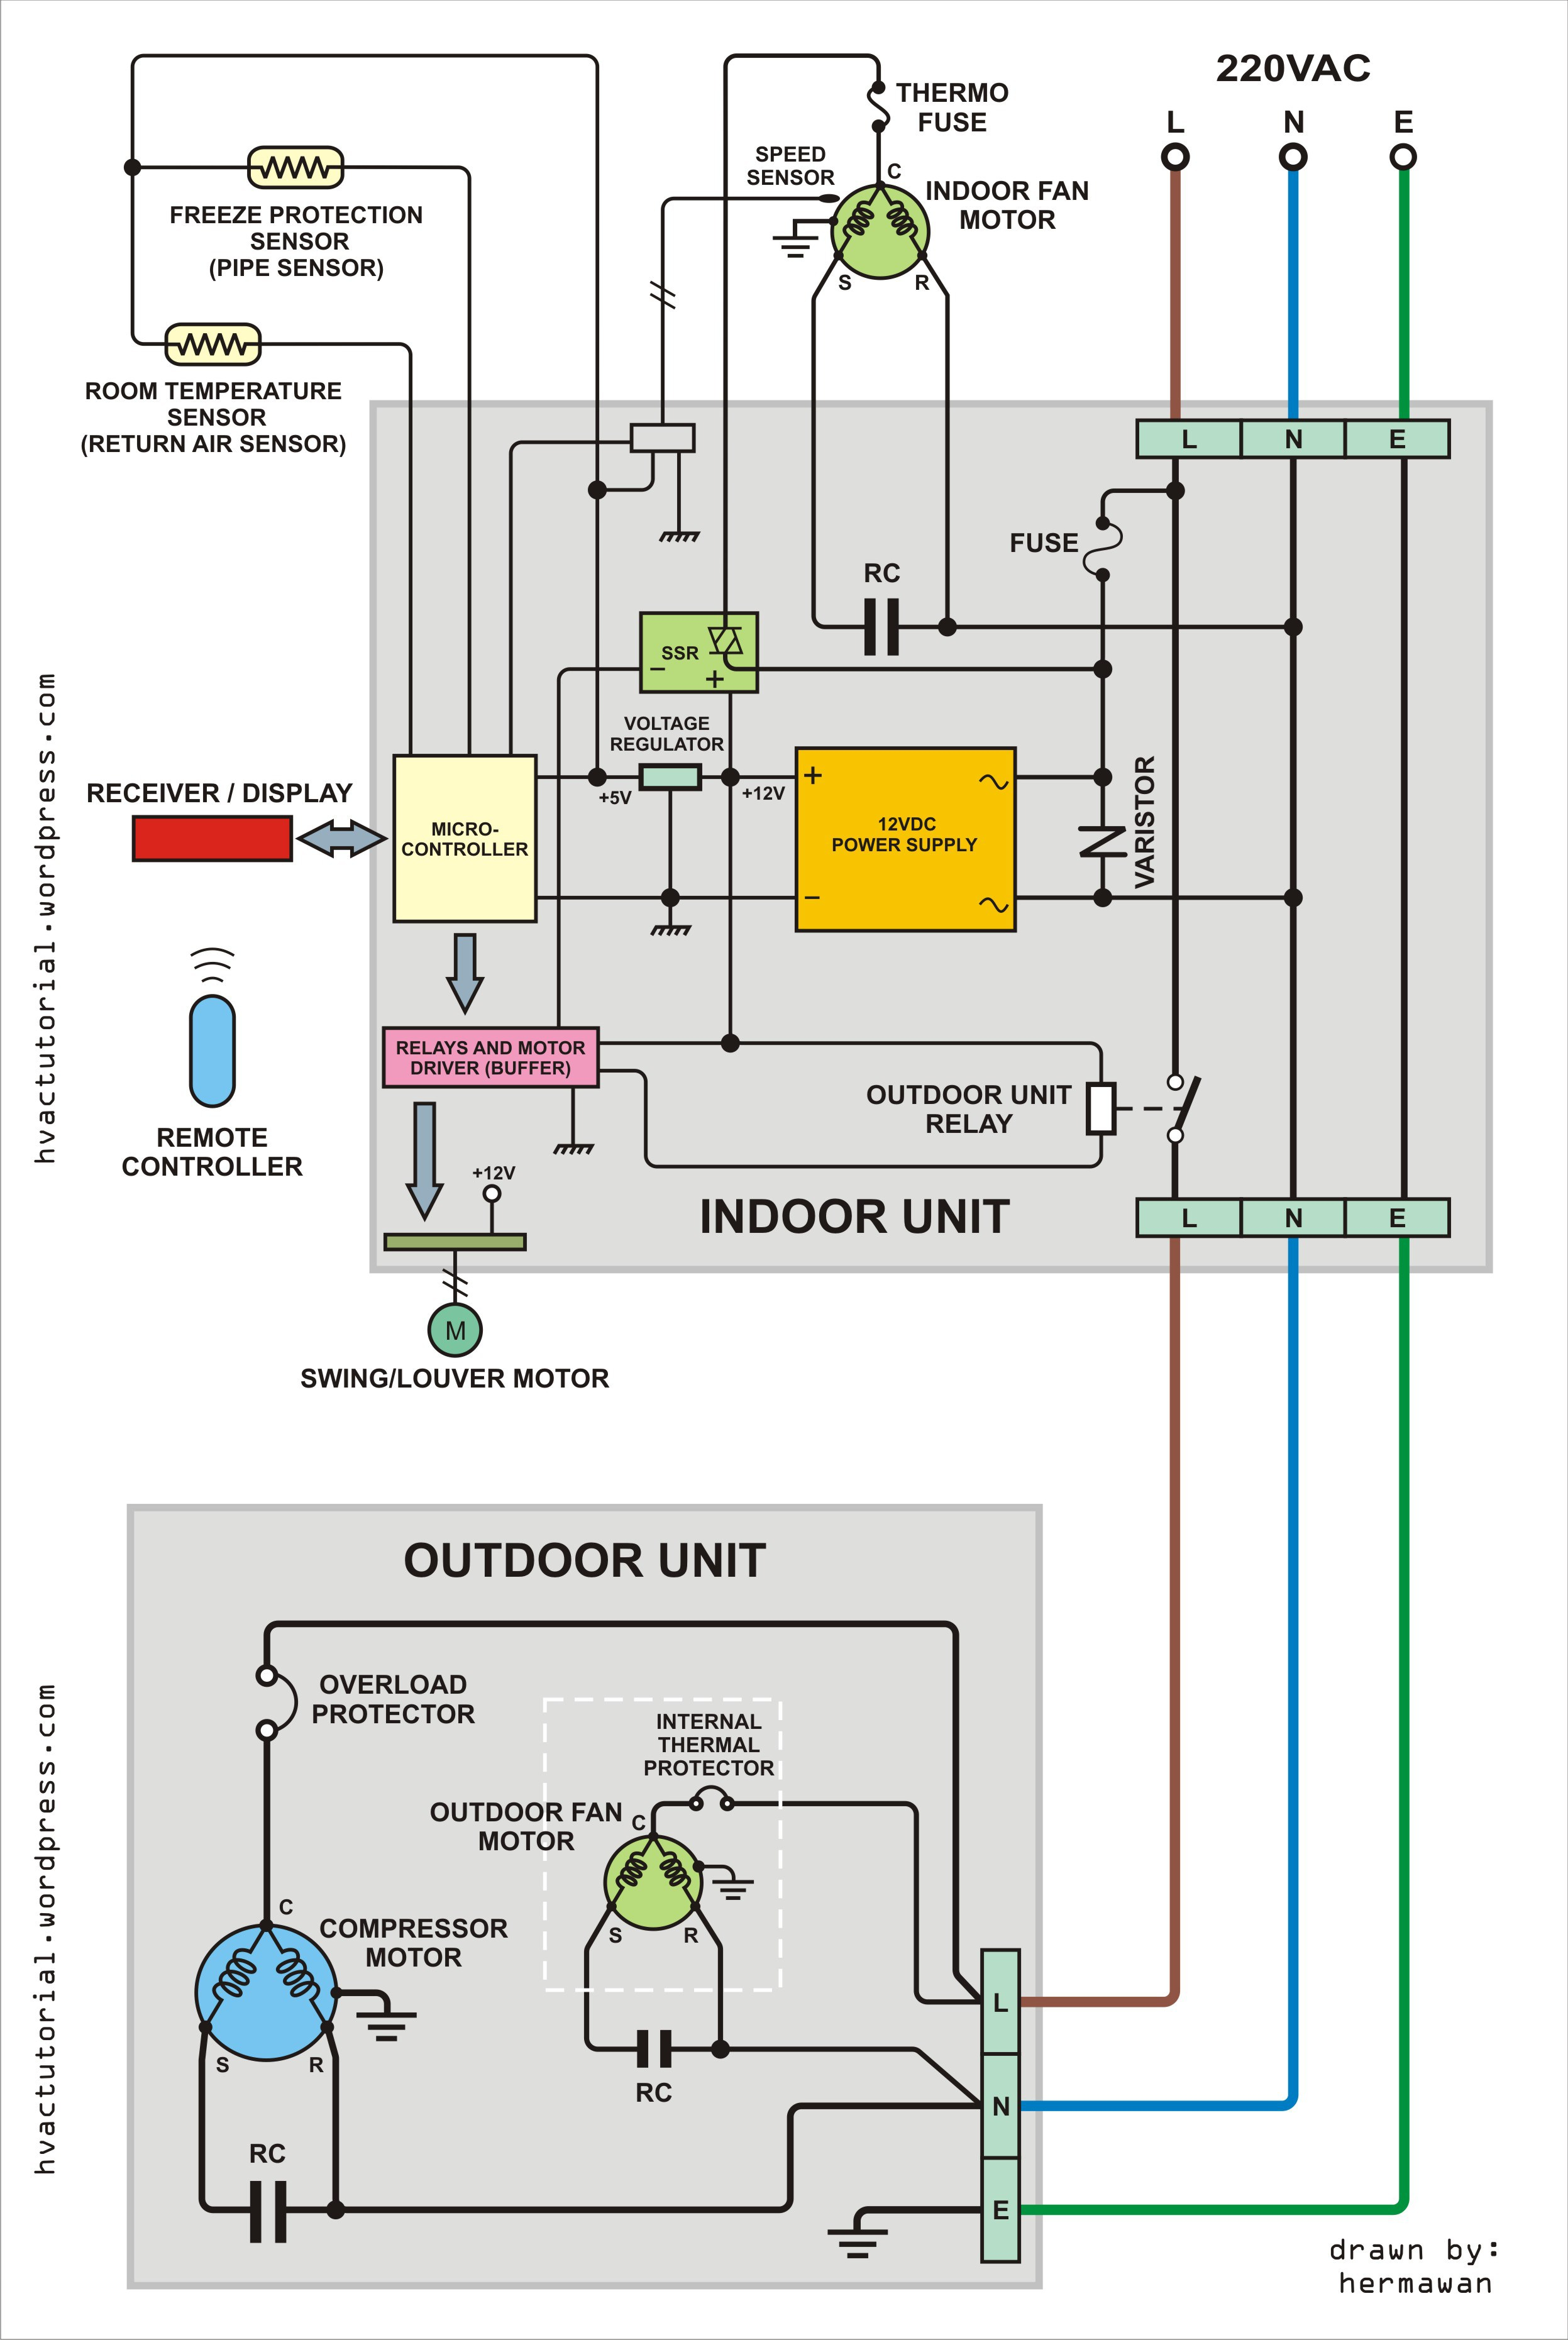 Air Conditioner Wiring Diagram Pdf Air Conditioning Schematic Diagram Wiring Diagram Local